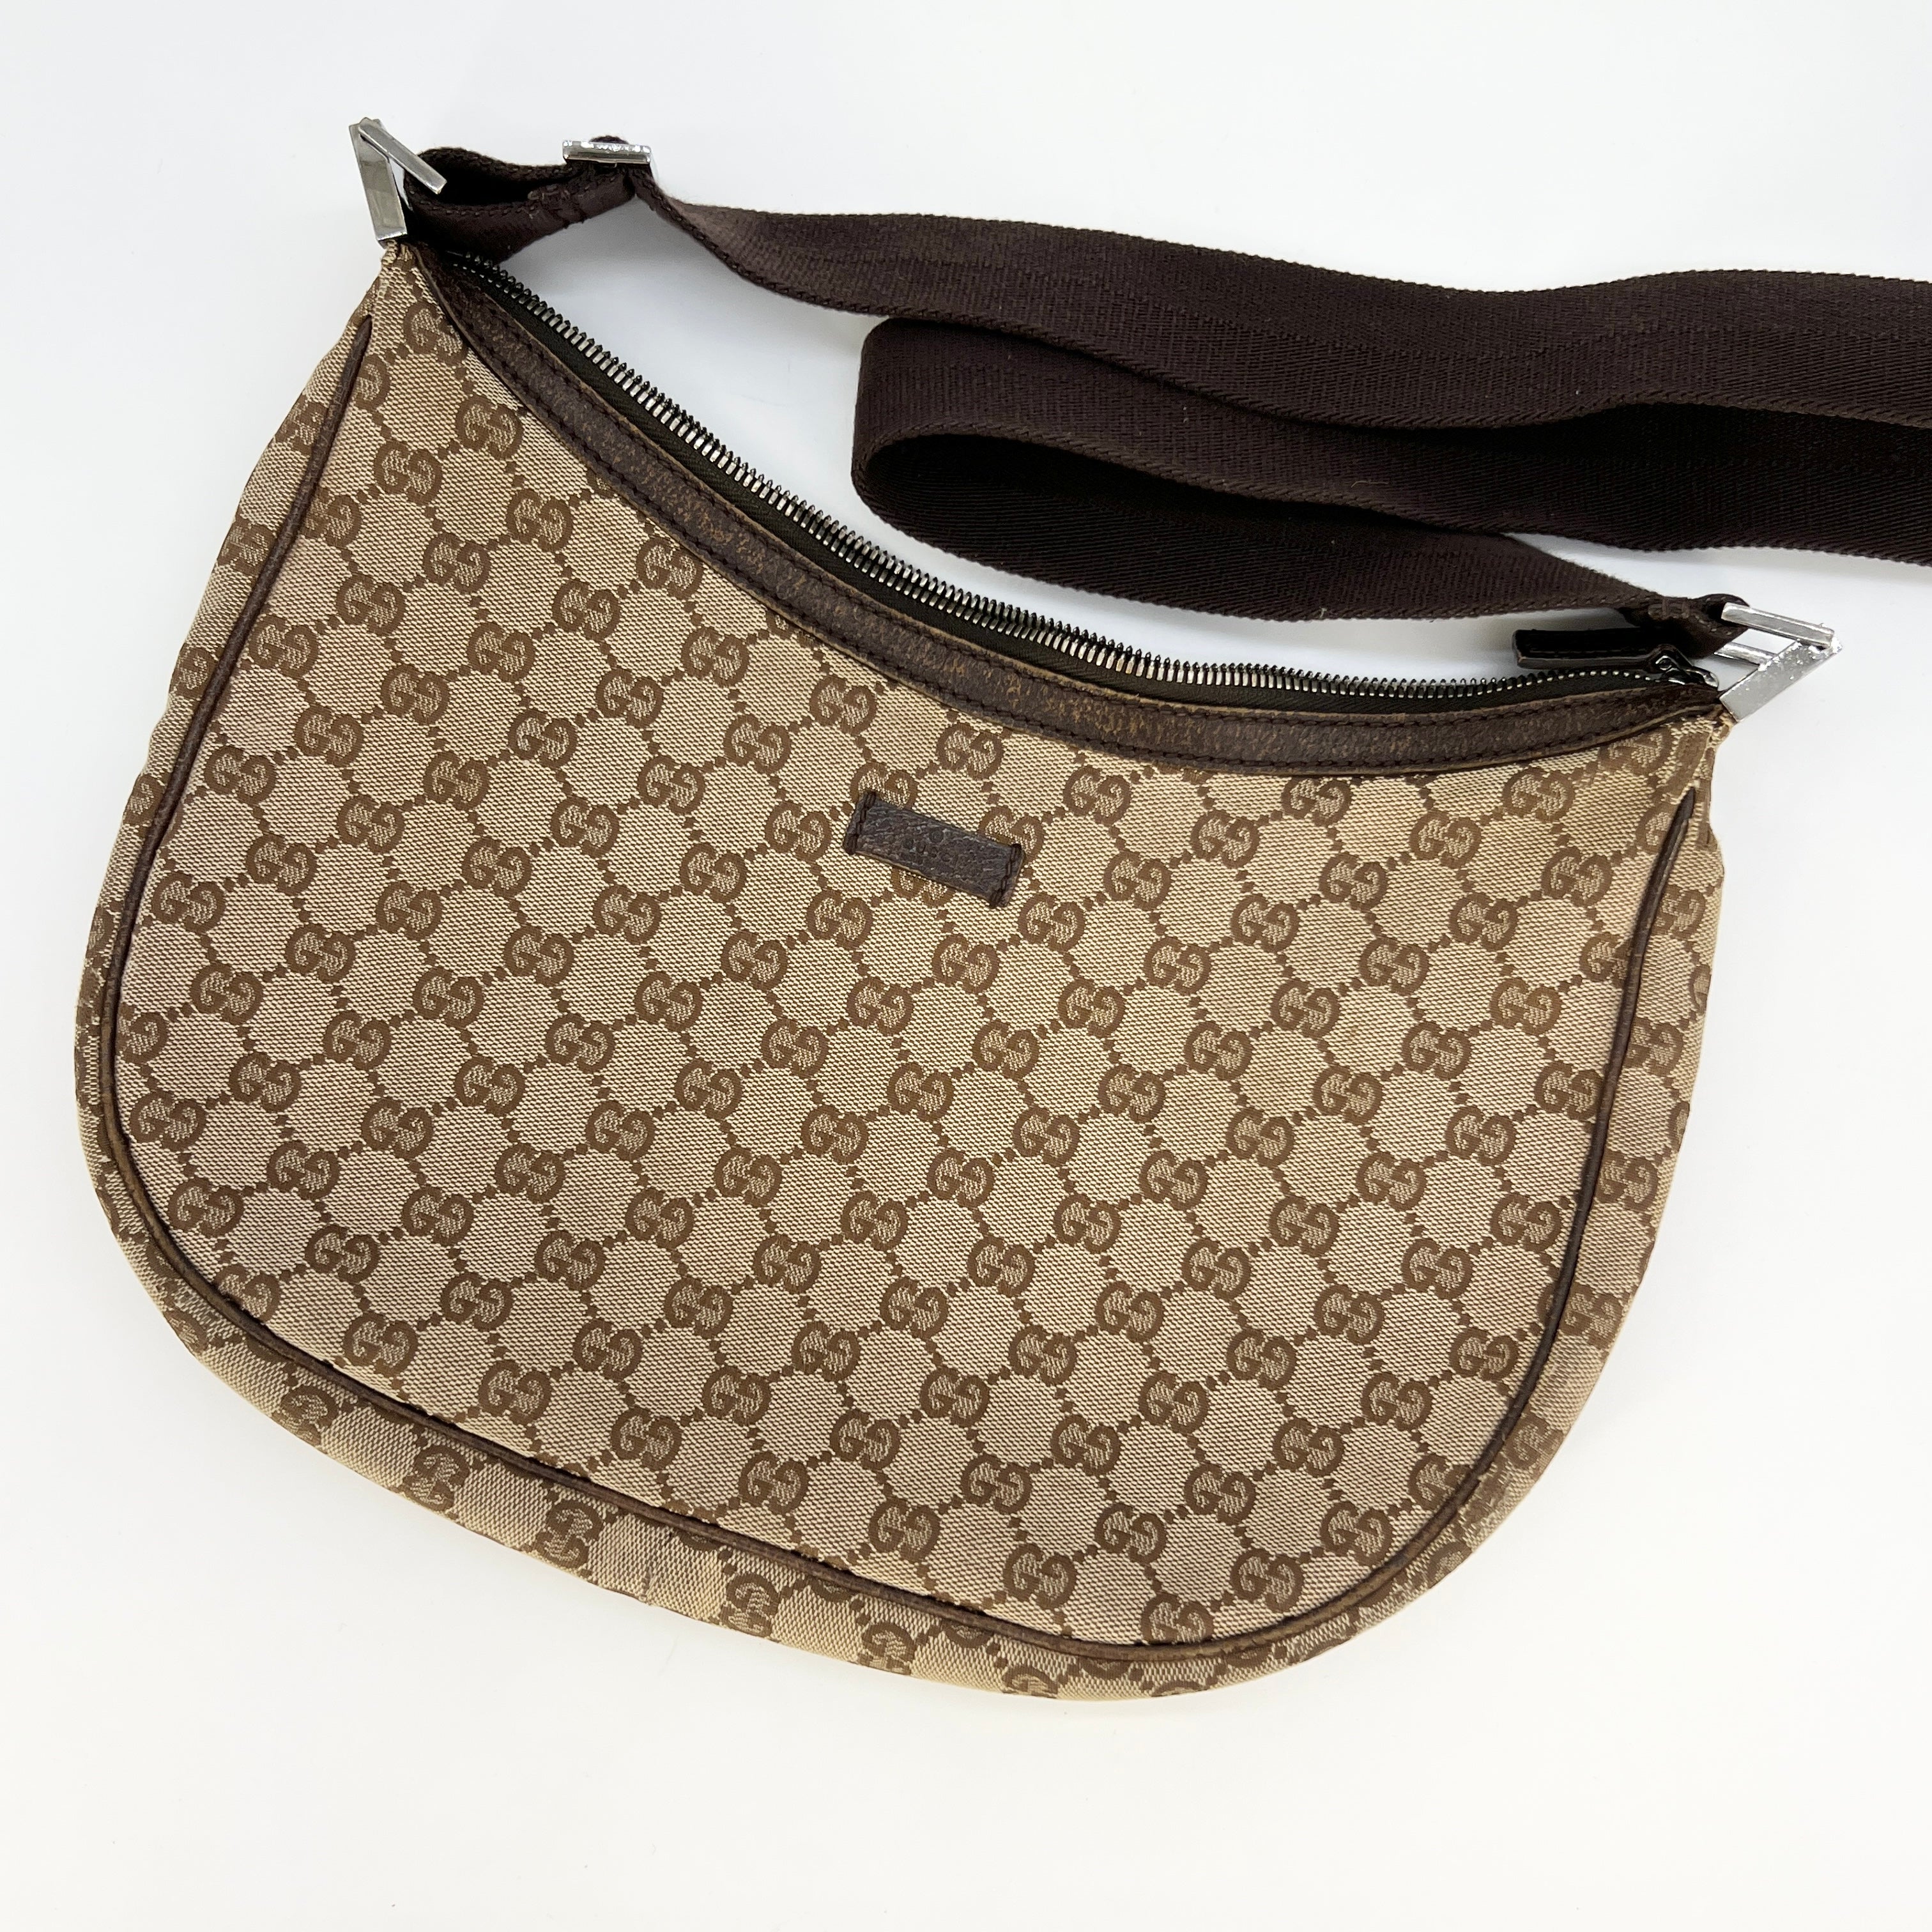 Vintage Authentic Gucci Logo Canvas Brown Leather Hobo Shoulder Bag